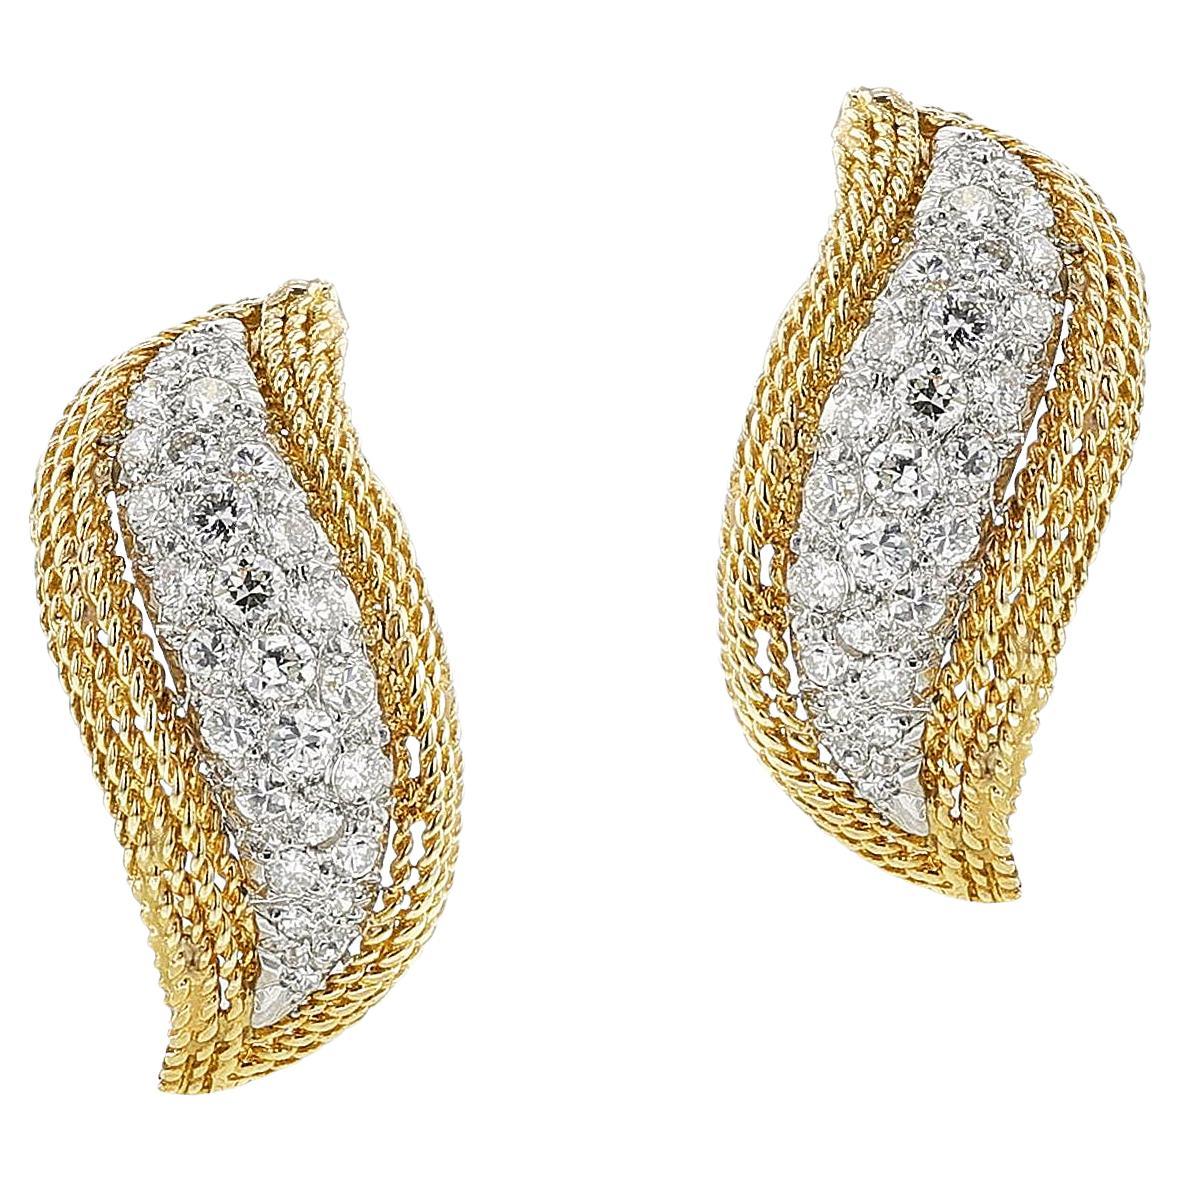 Diamond and Gold Earrings, 18k